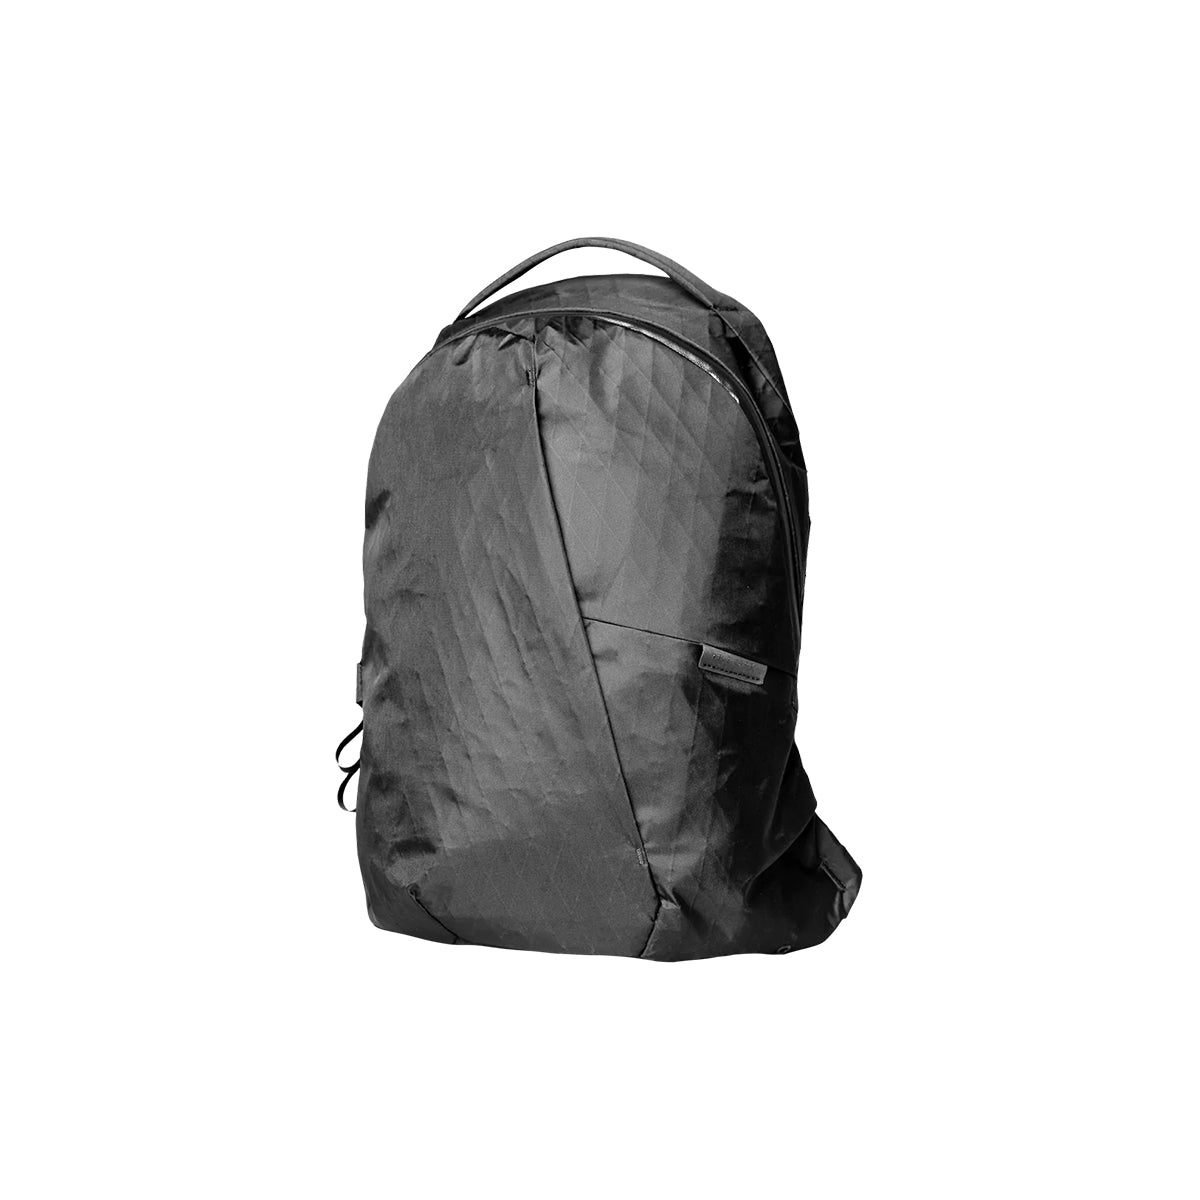 Able Carry : Thirteen Daybag : X-Pac Black (VX21)